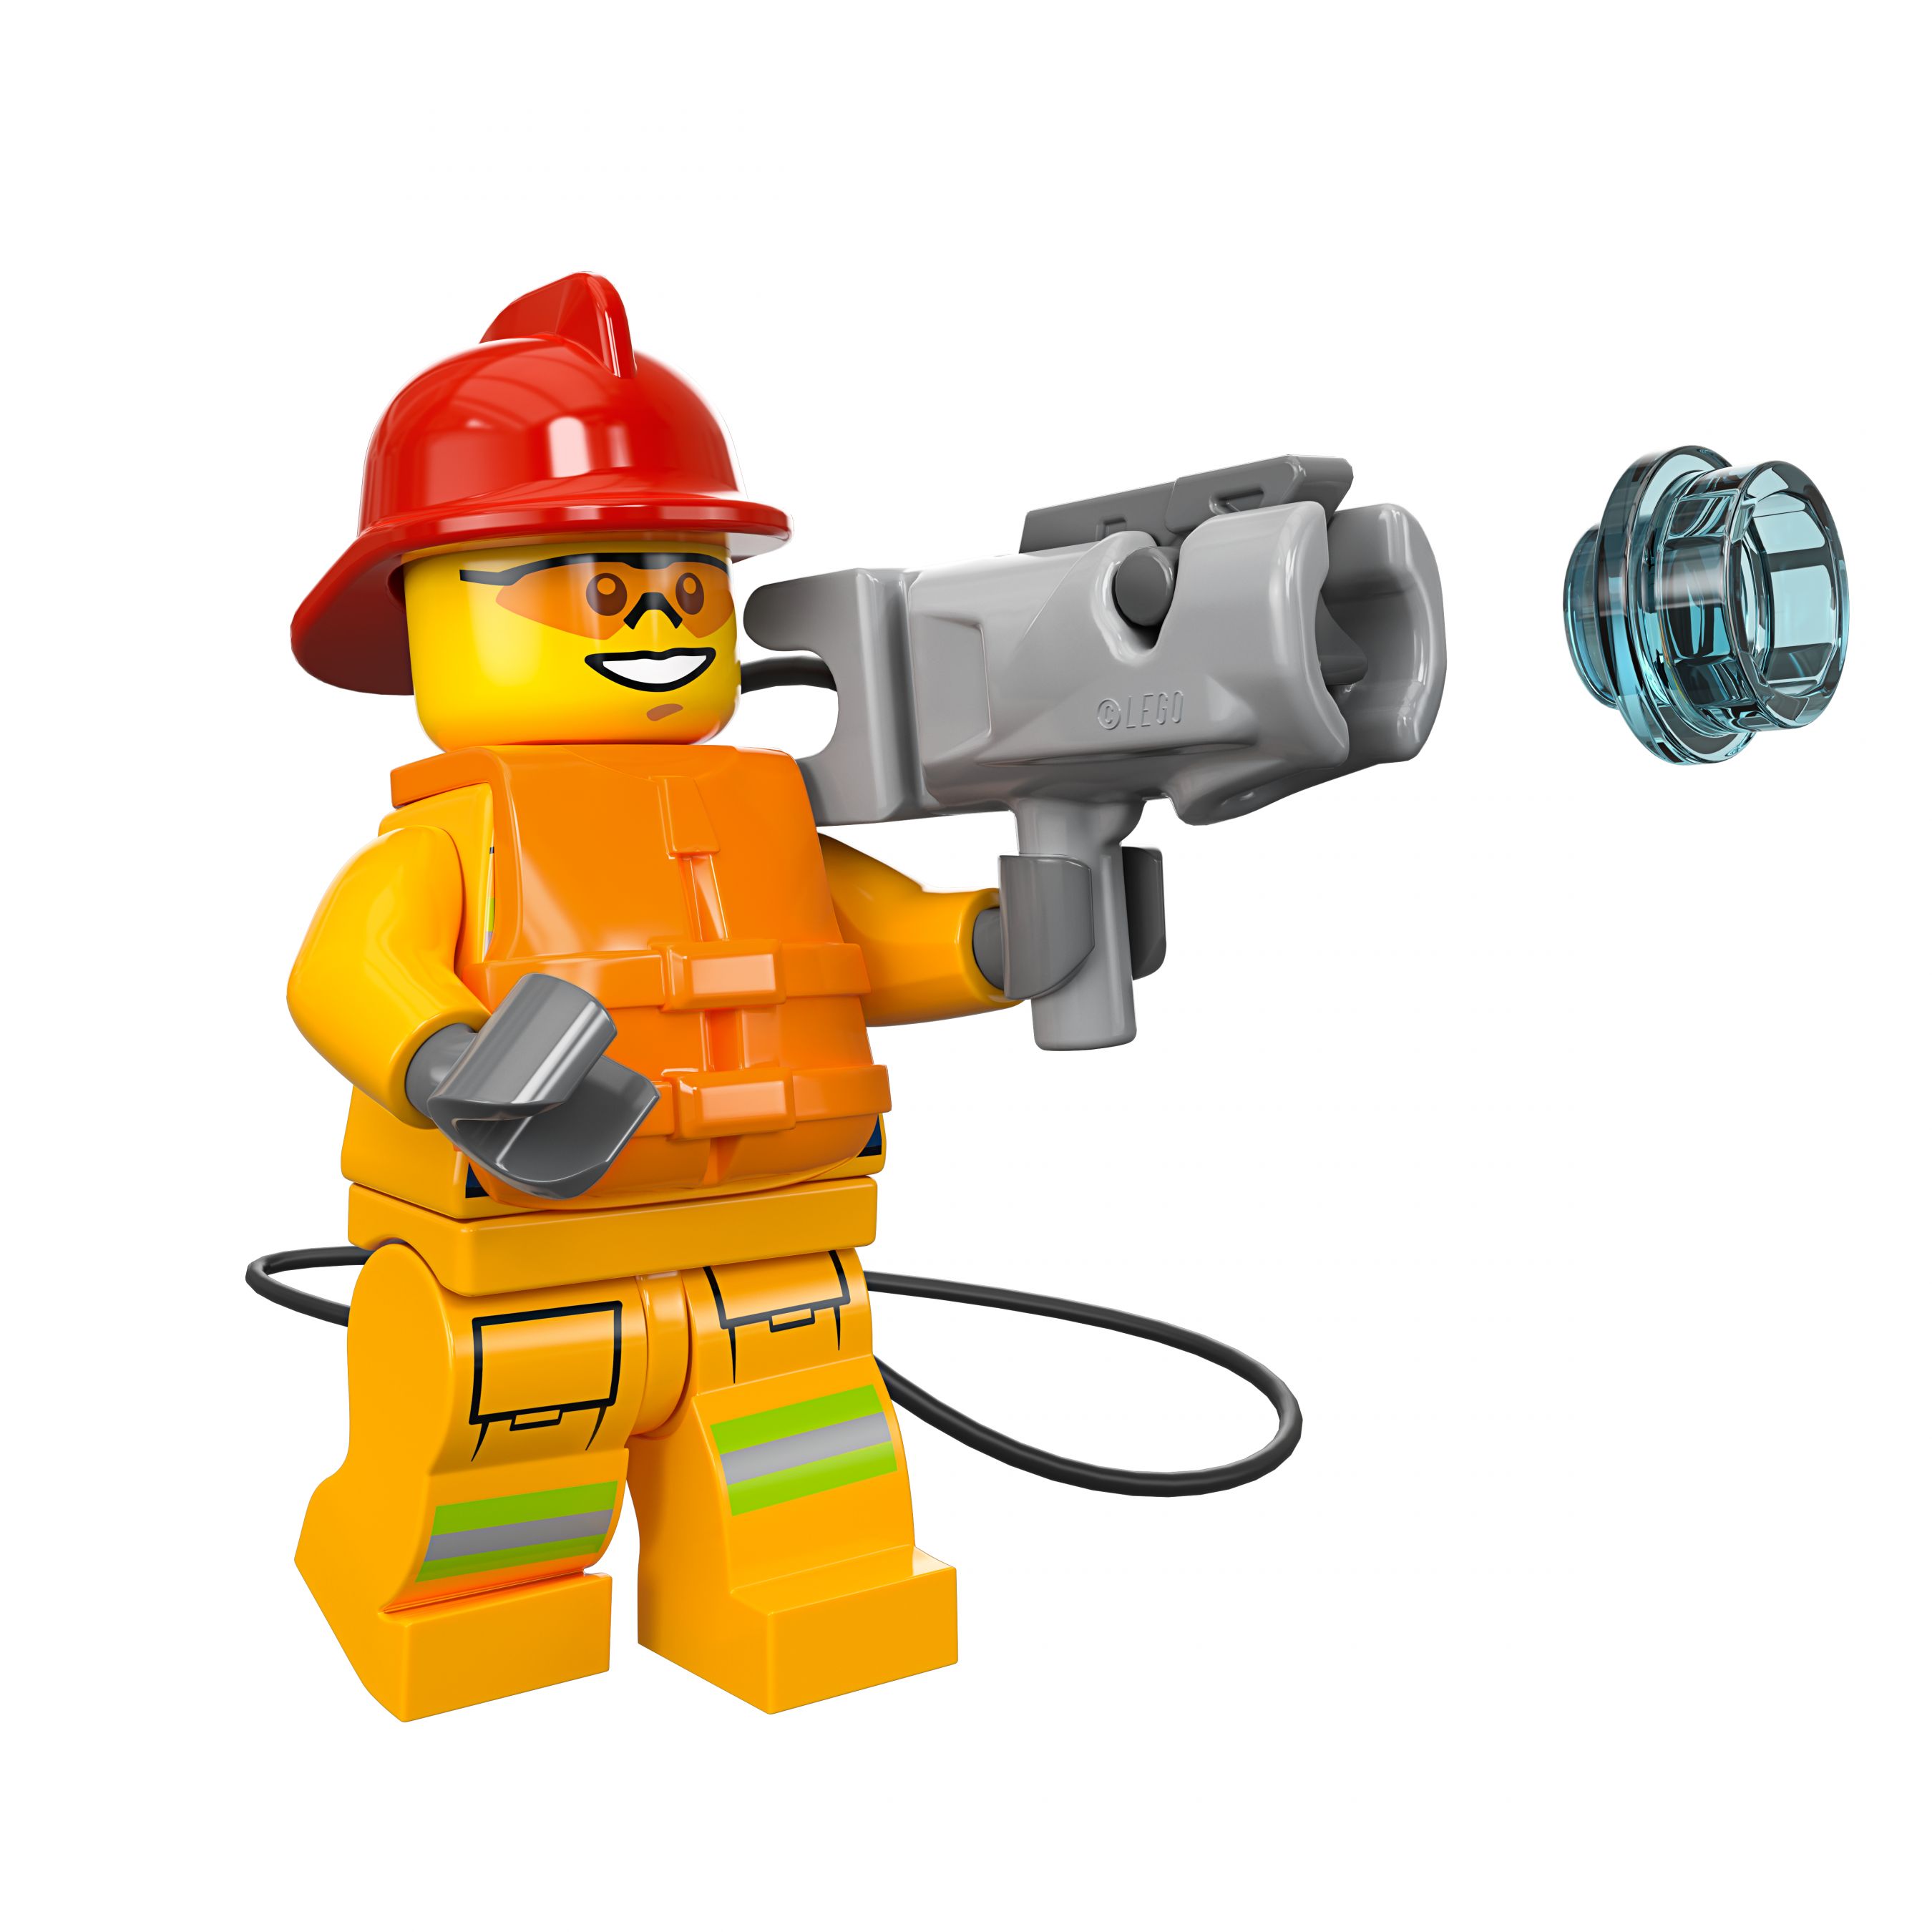 LEGO City 60215 Feuerwehrstation LEGO_60215_alt8.jpg